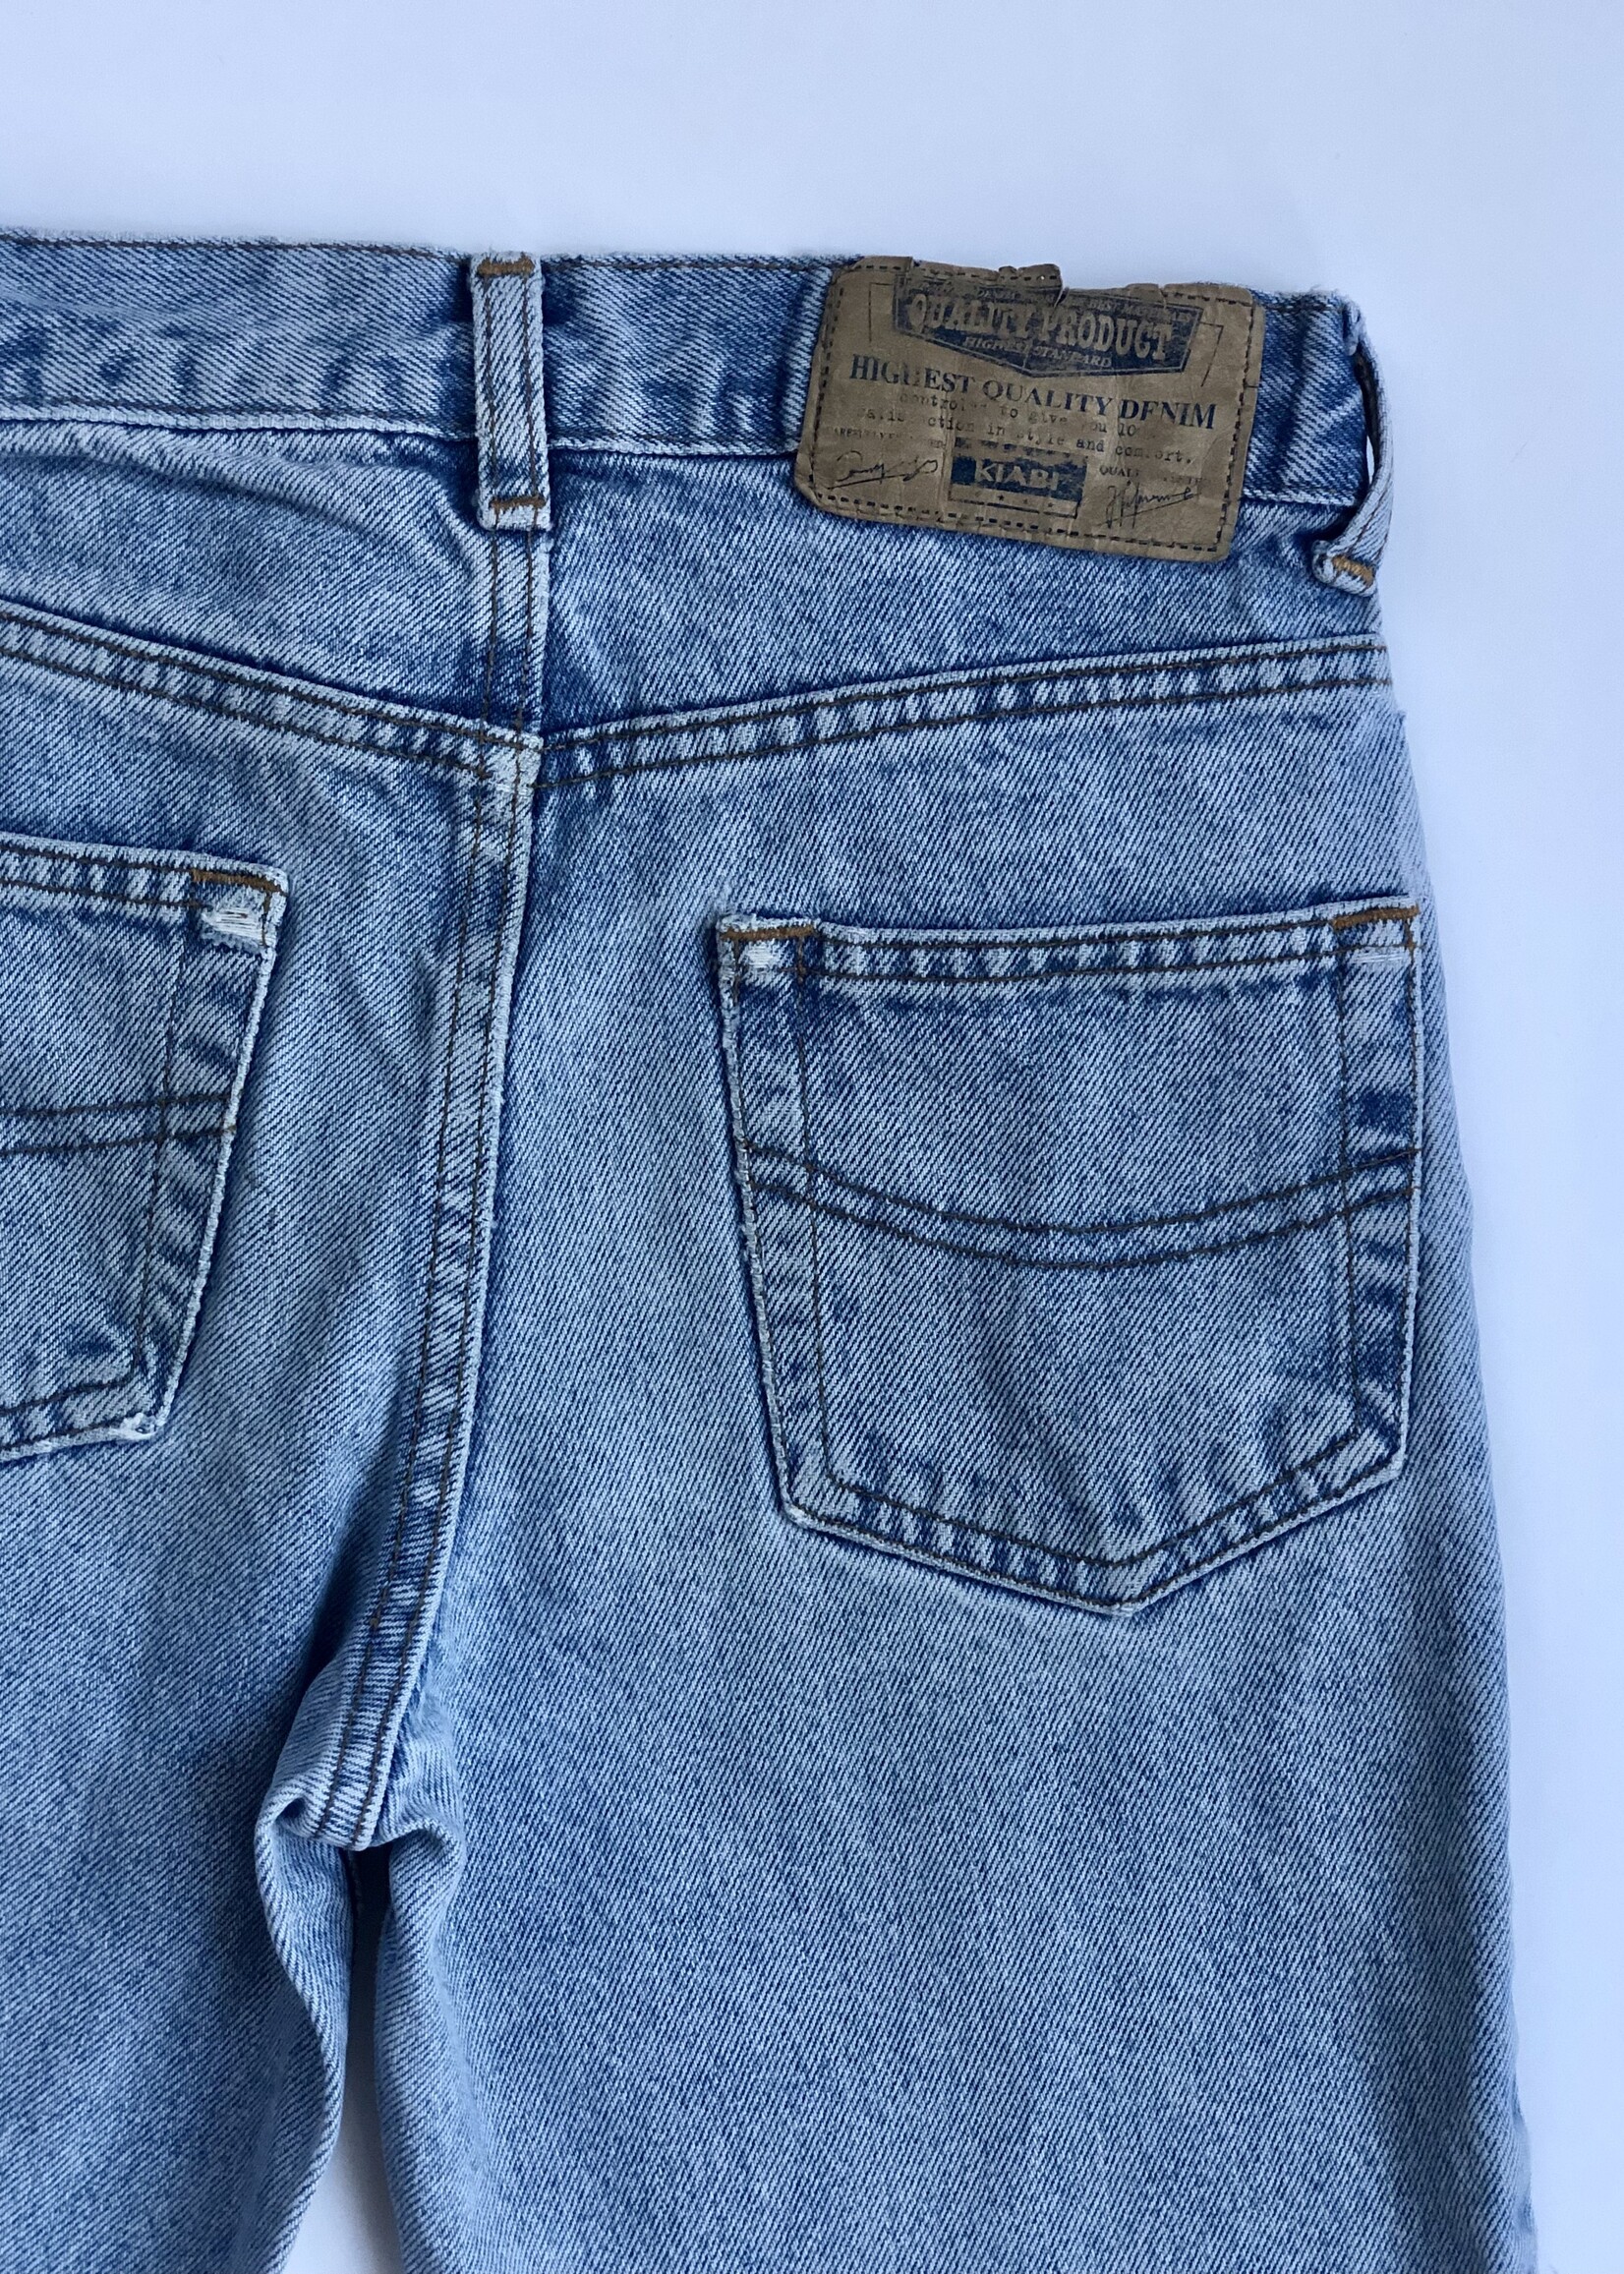 Vintage Light wash cut off jeans 7-8y